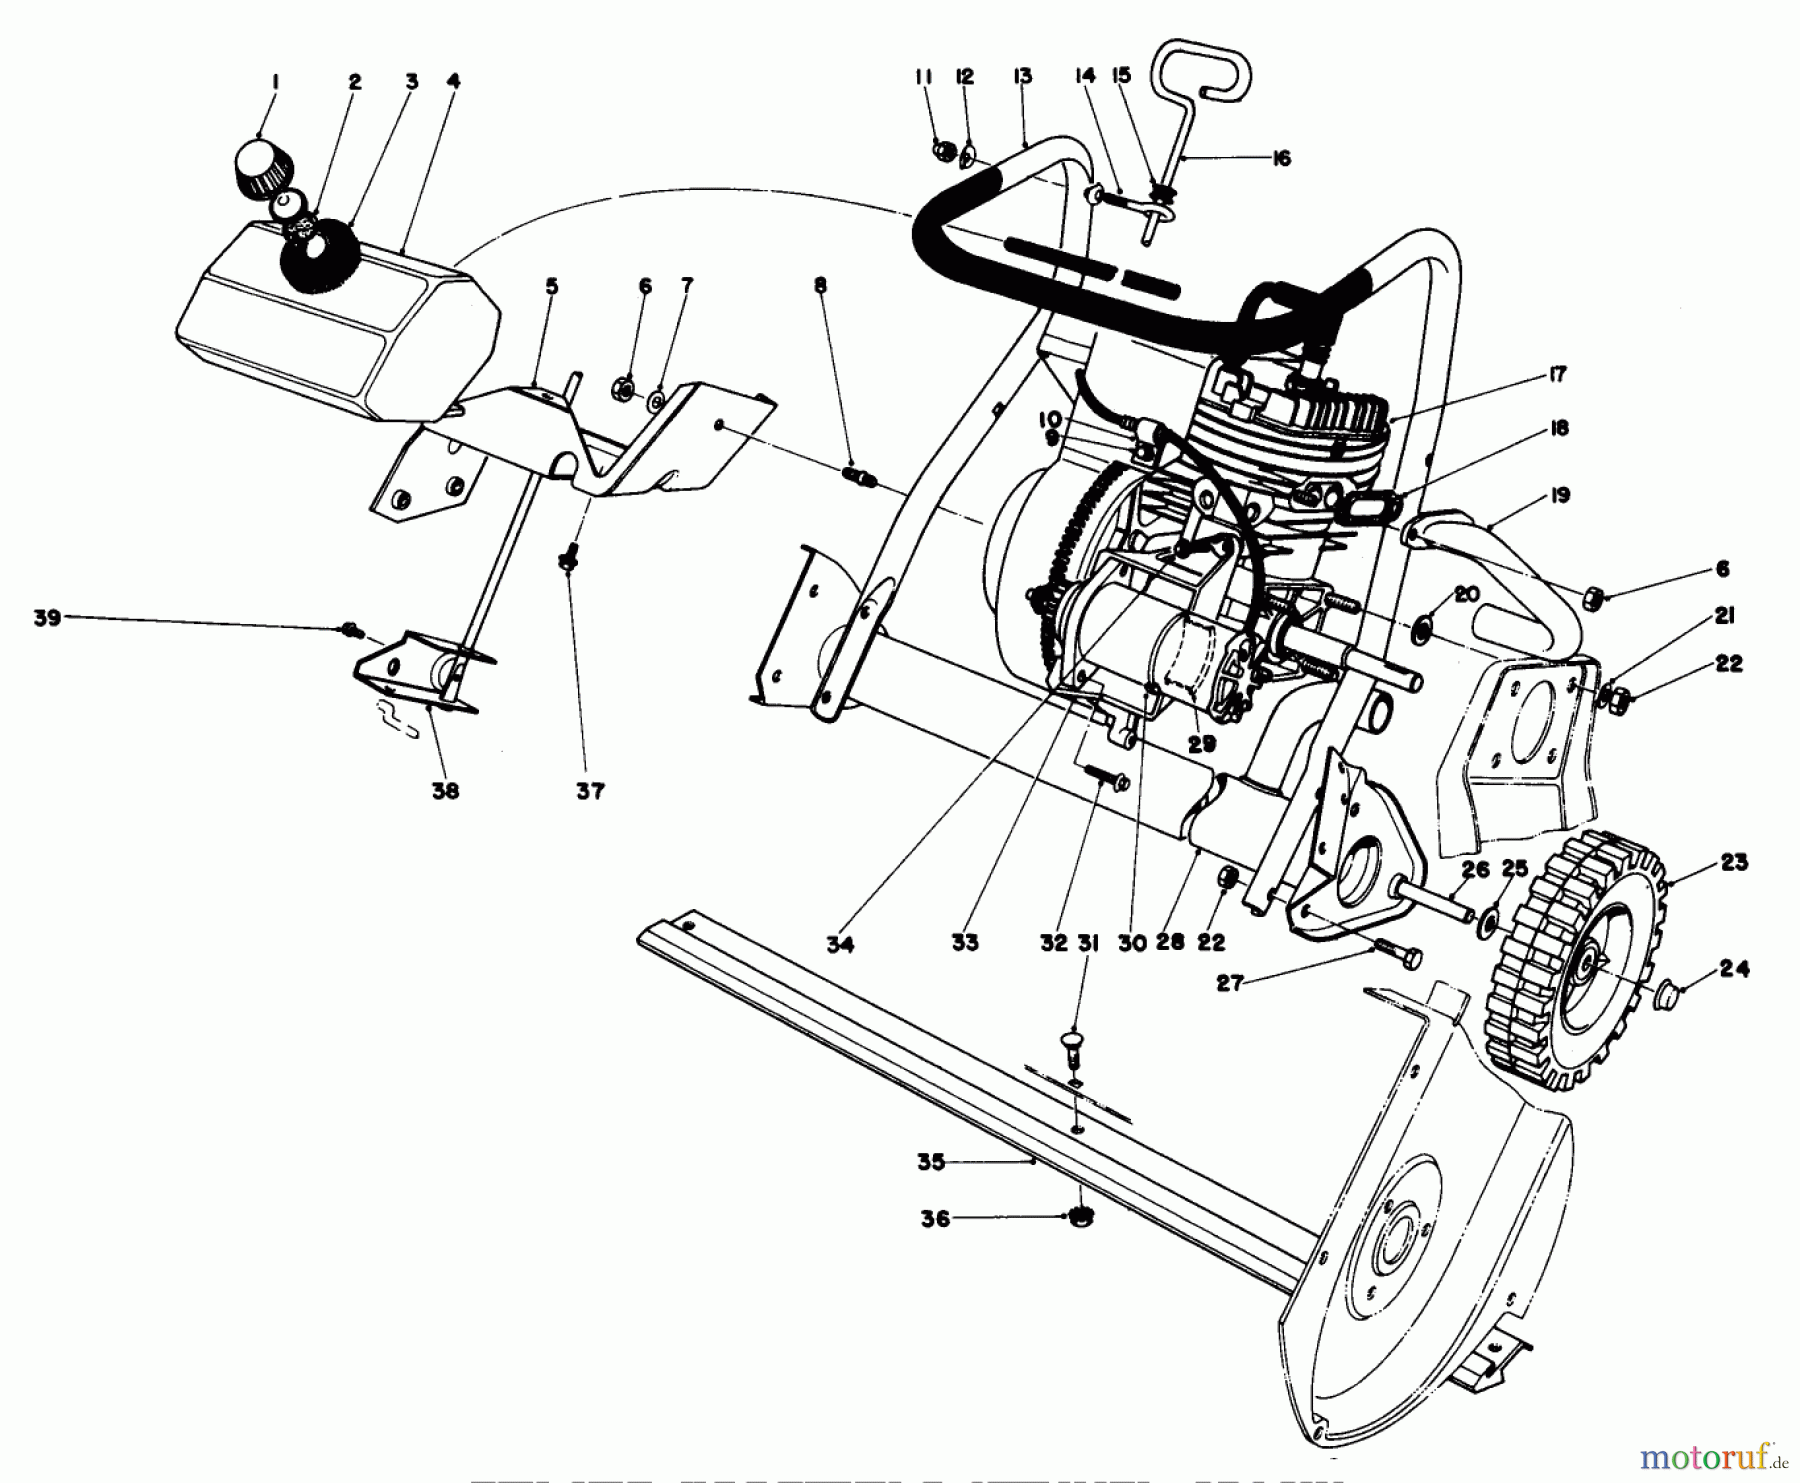  Toro Neu Snow Blowers/Snow Throwers Seite 1 38120 (S-200) - Toro S-200 Snowthrower, 1981 (1000351-1999999) ENGINE ASSEMBLY (MODEL 38130)